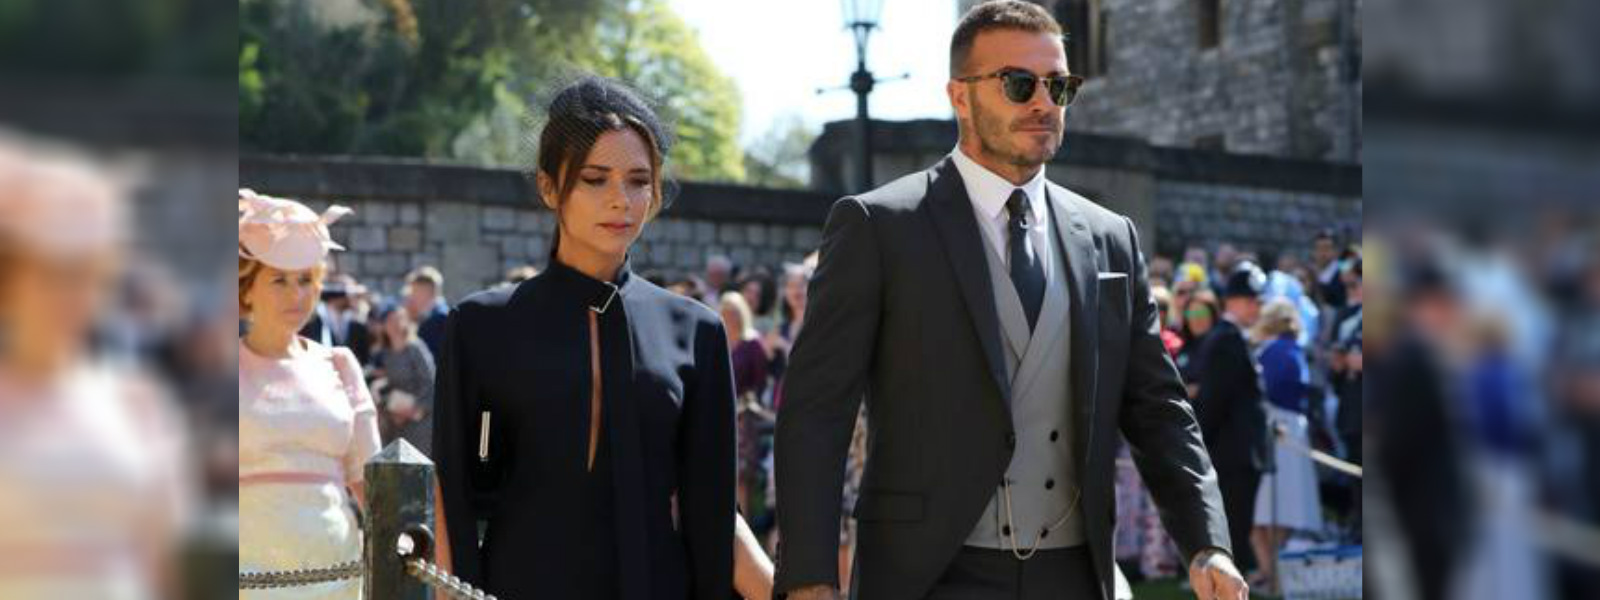 Beckhams donate royal wedding outfits